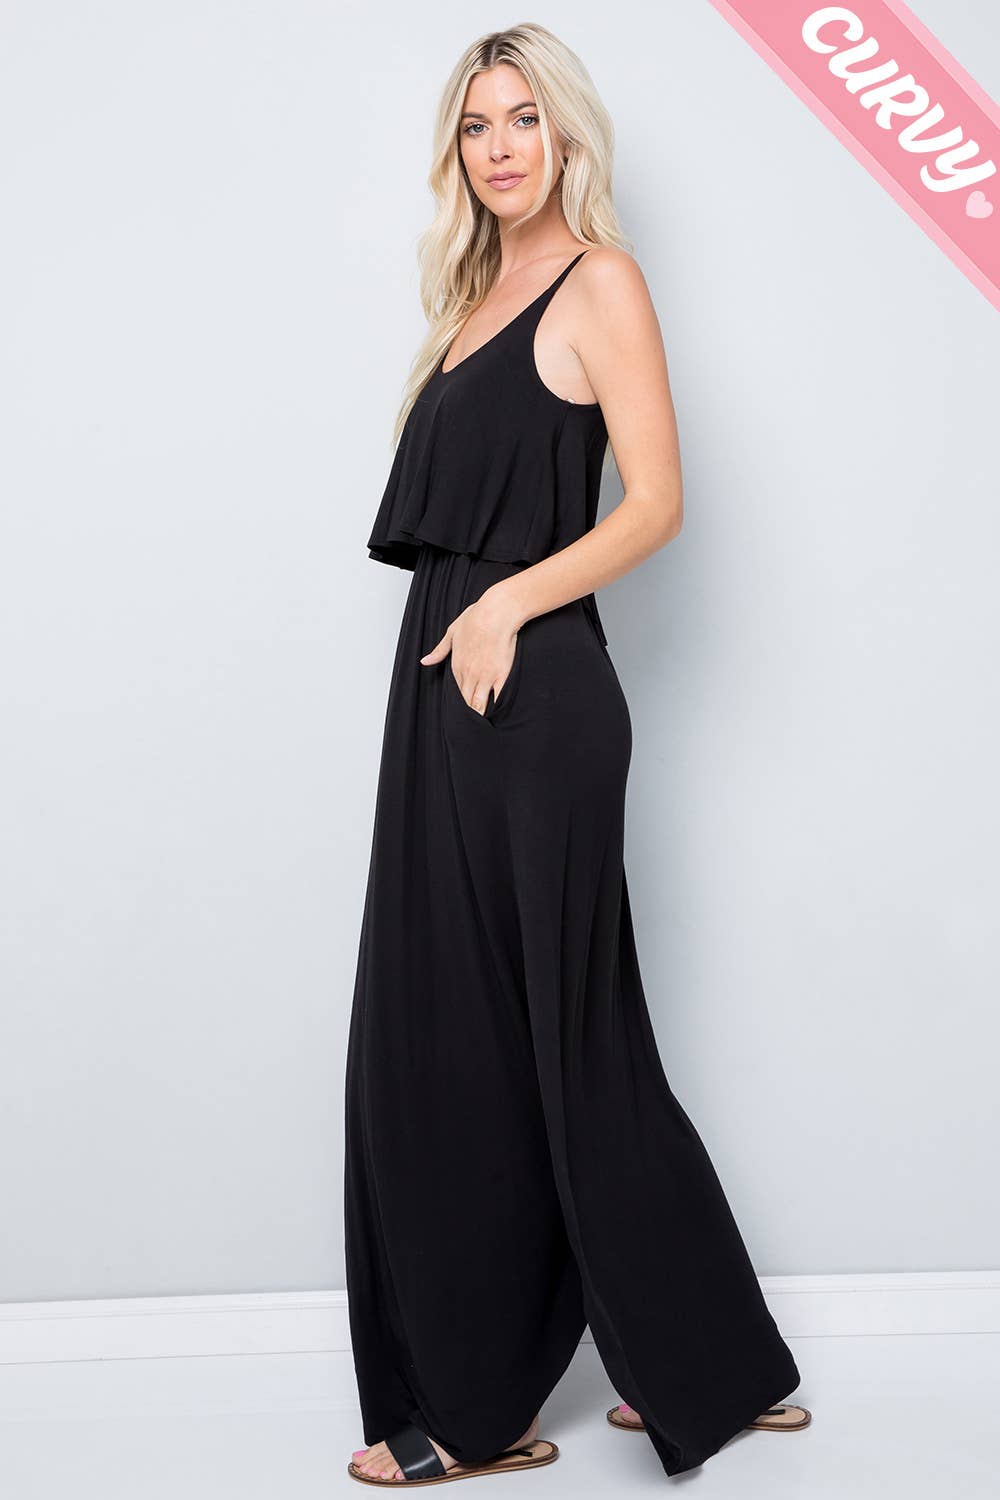 Women's black plus size ruffled draped cami maxi dress with side slits